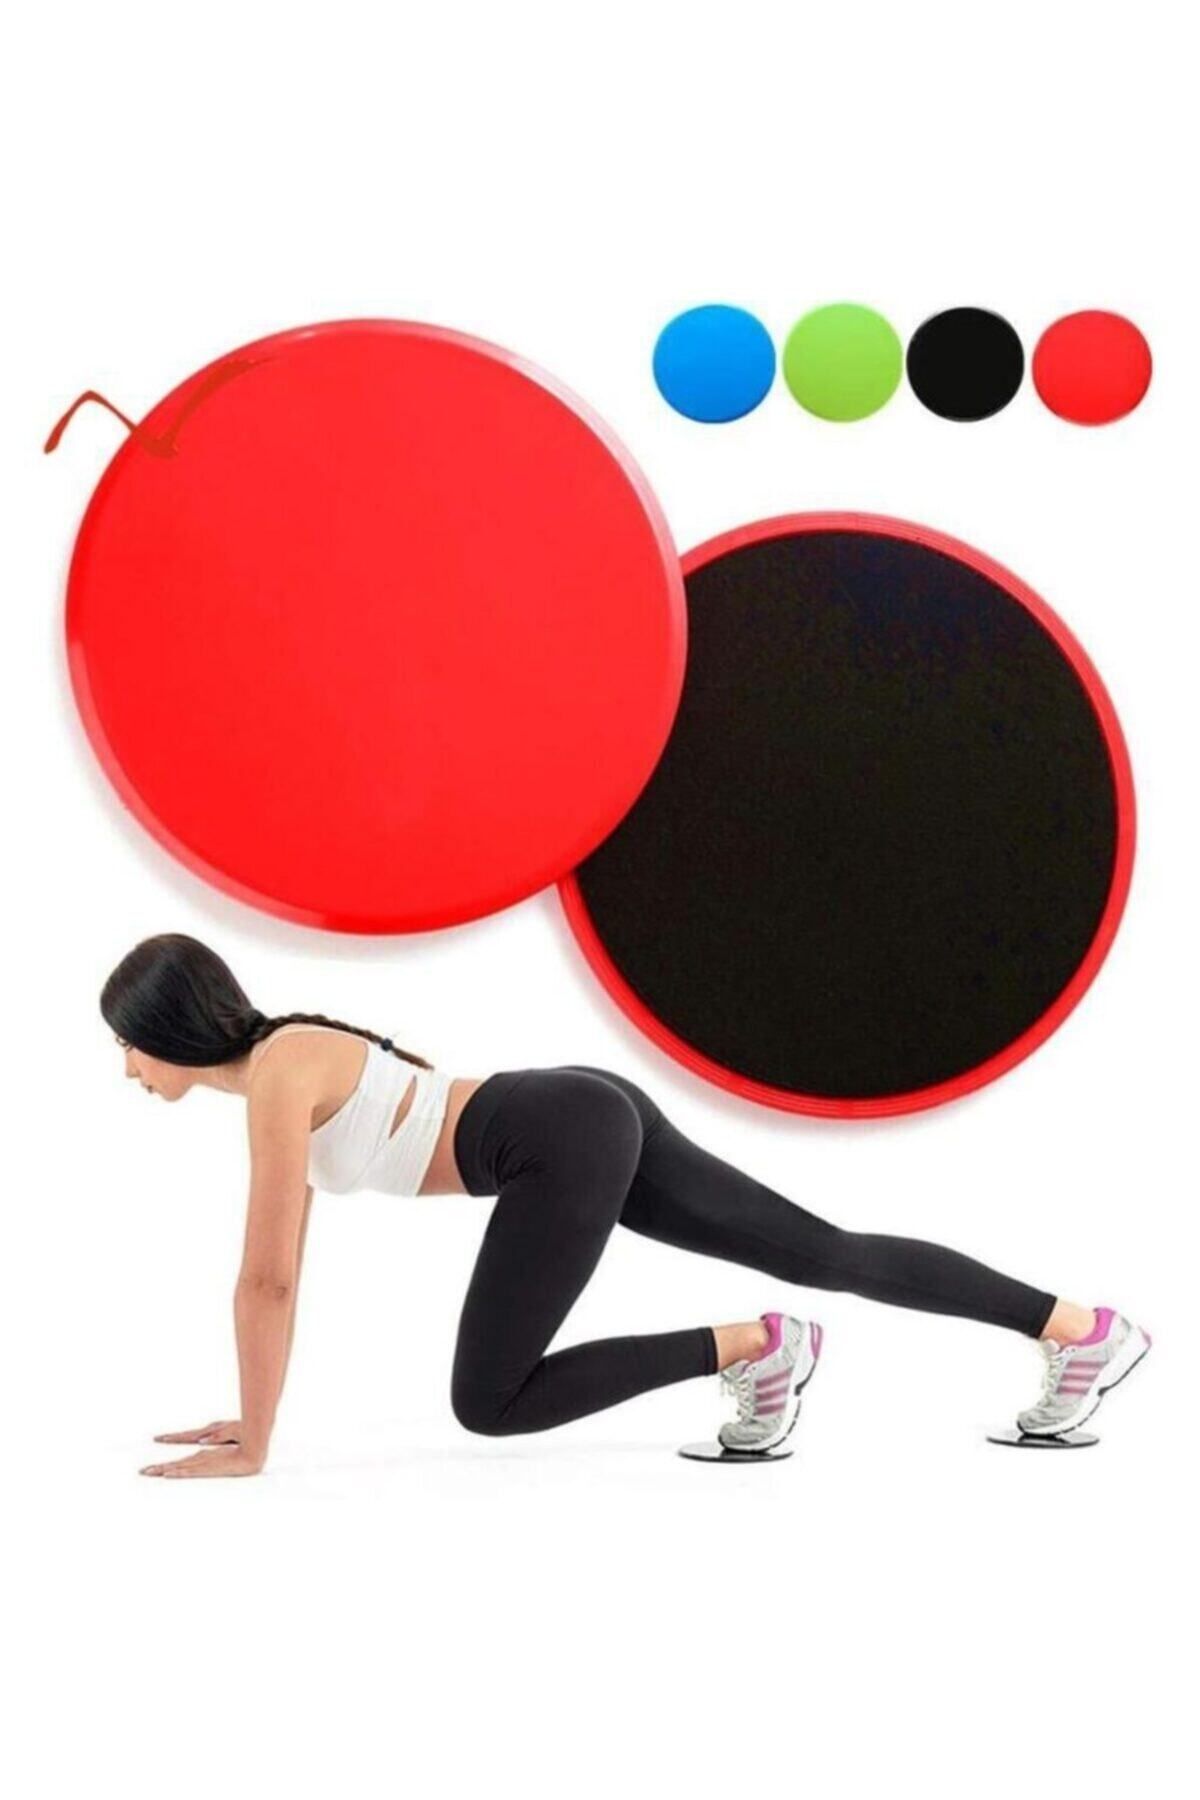 MOYASHOP Slide Disk - Egzersiz Pilates Yoga Diski - Spor - Fizik Tedavi